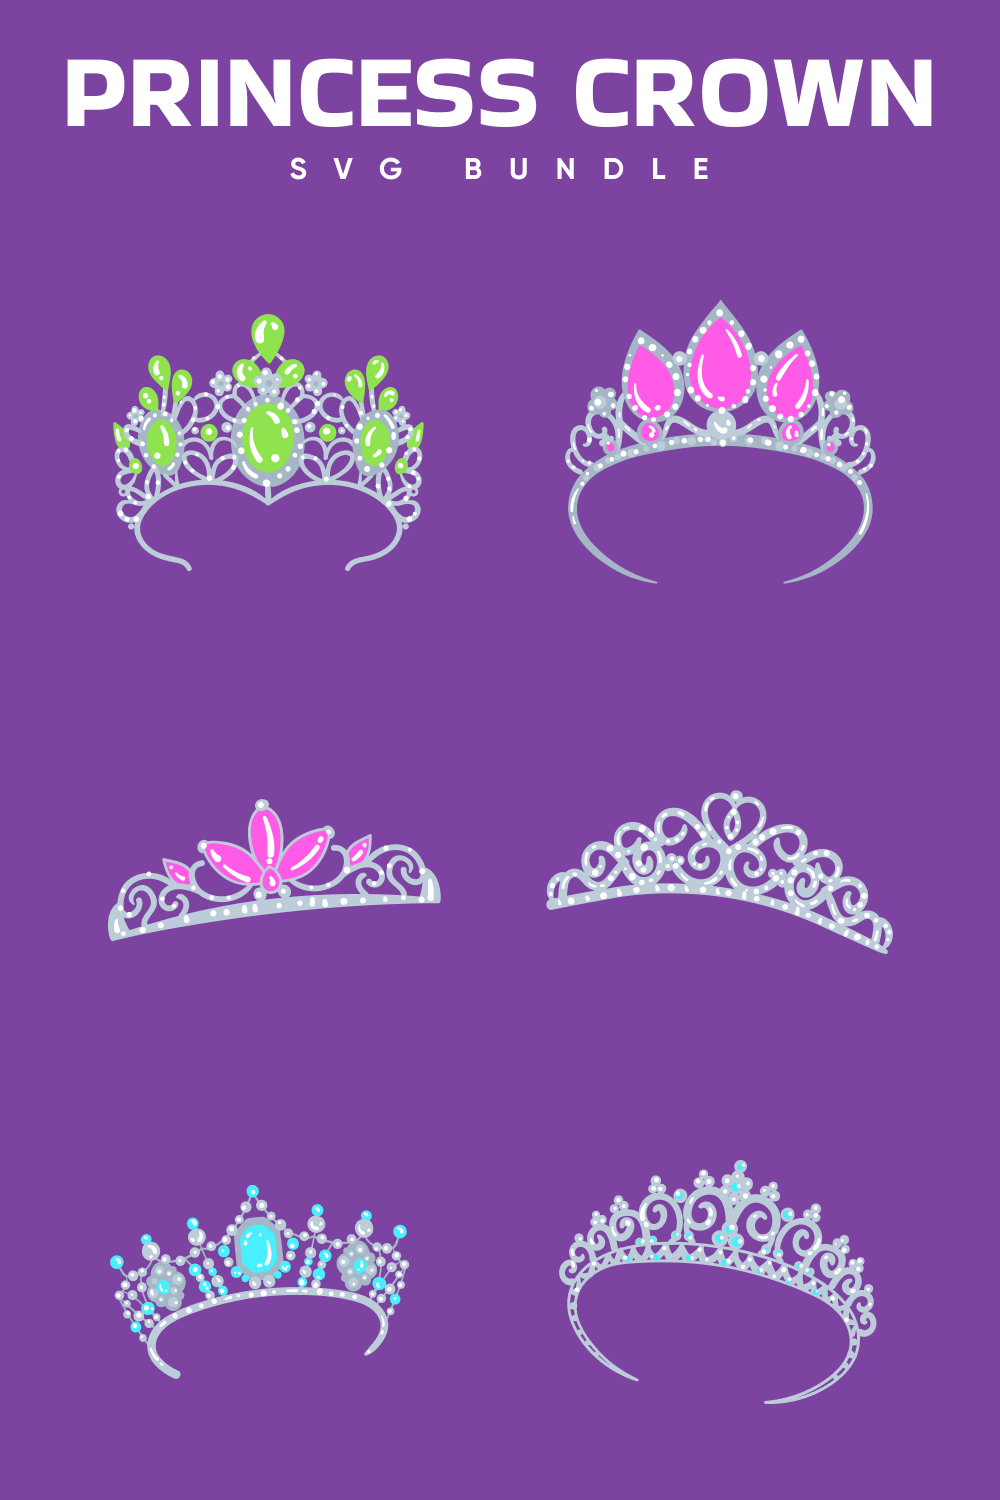 Princess crown SVG bundle princess crown.